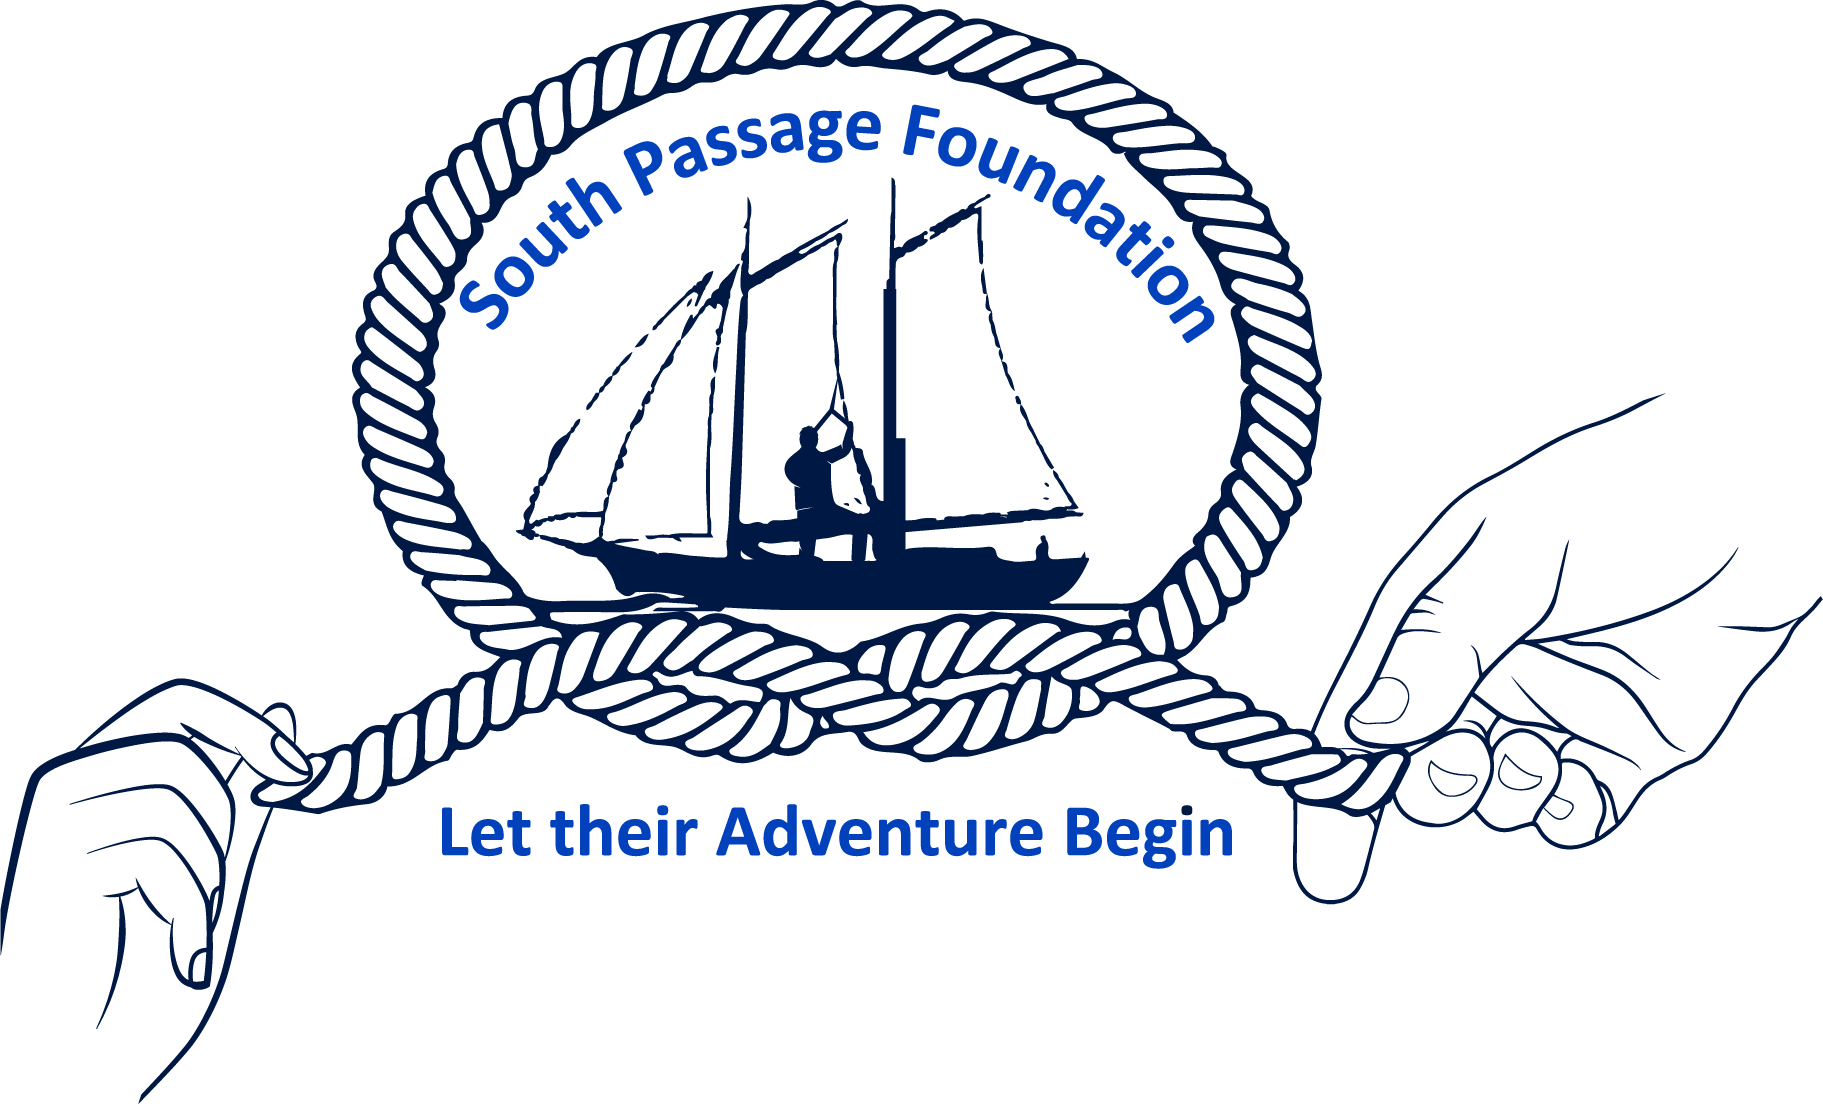 South Passage Foundation